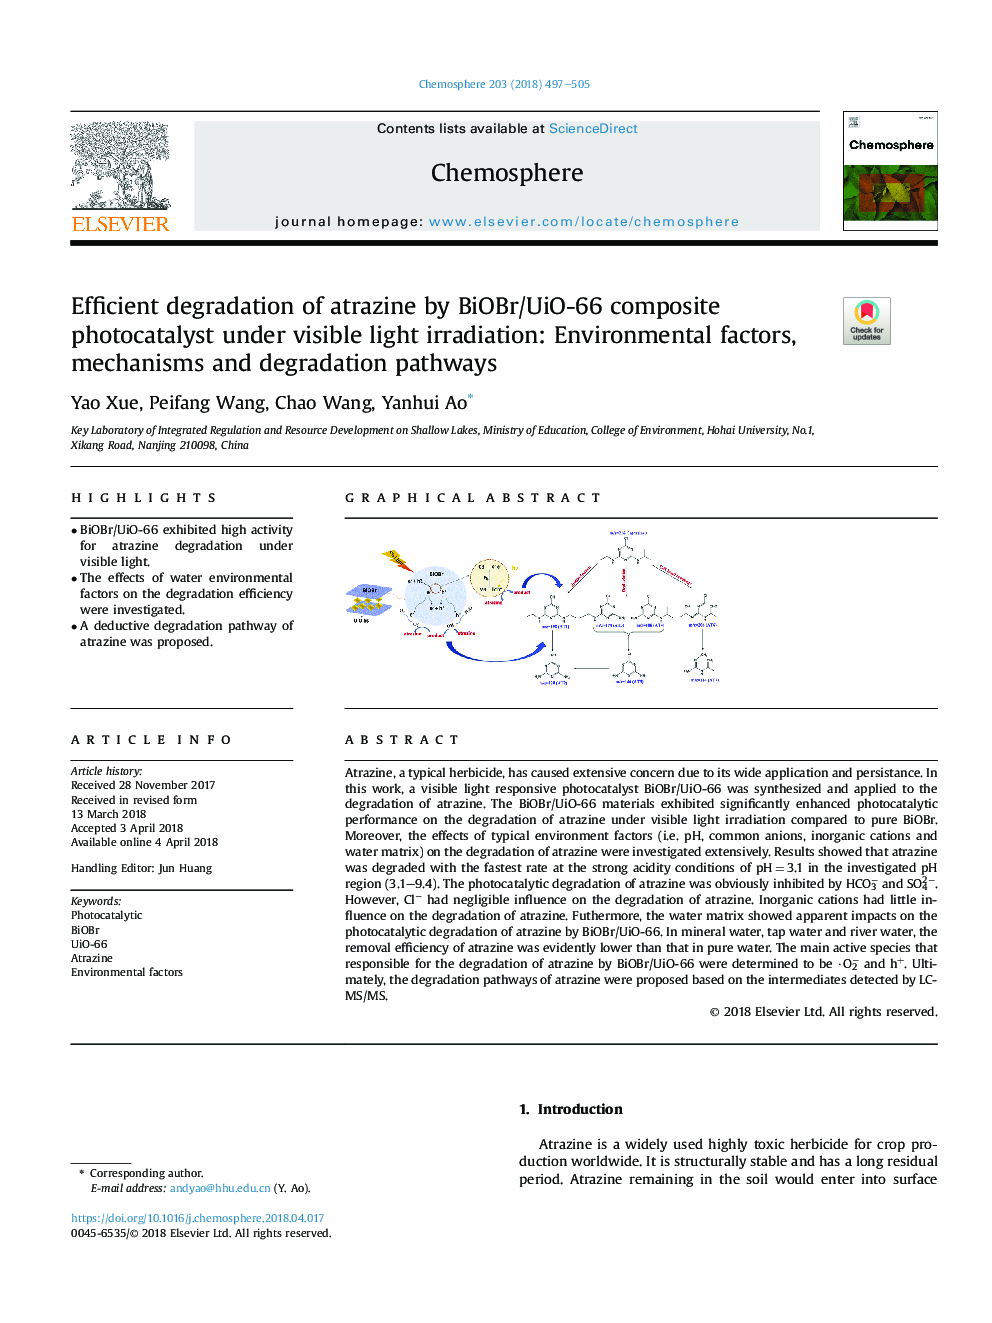 Efficient degradation of atrazine by BiOBr/UiO-66 composite photocatalyst under visible light irradiation: Environmental factors, mechanisms and degradation pathways